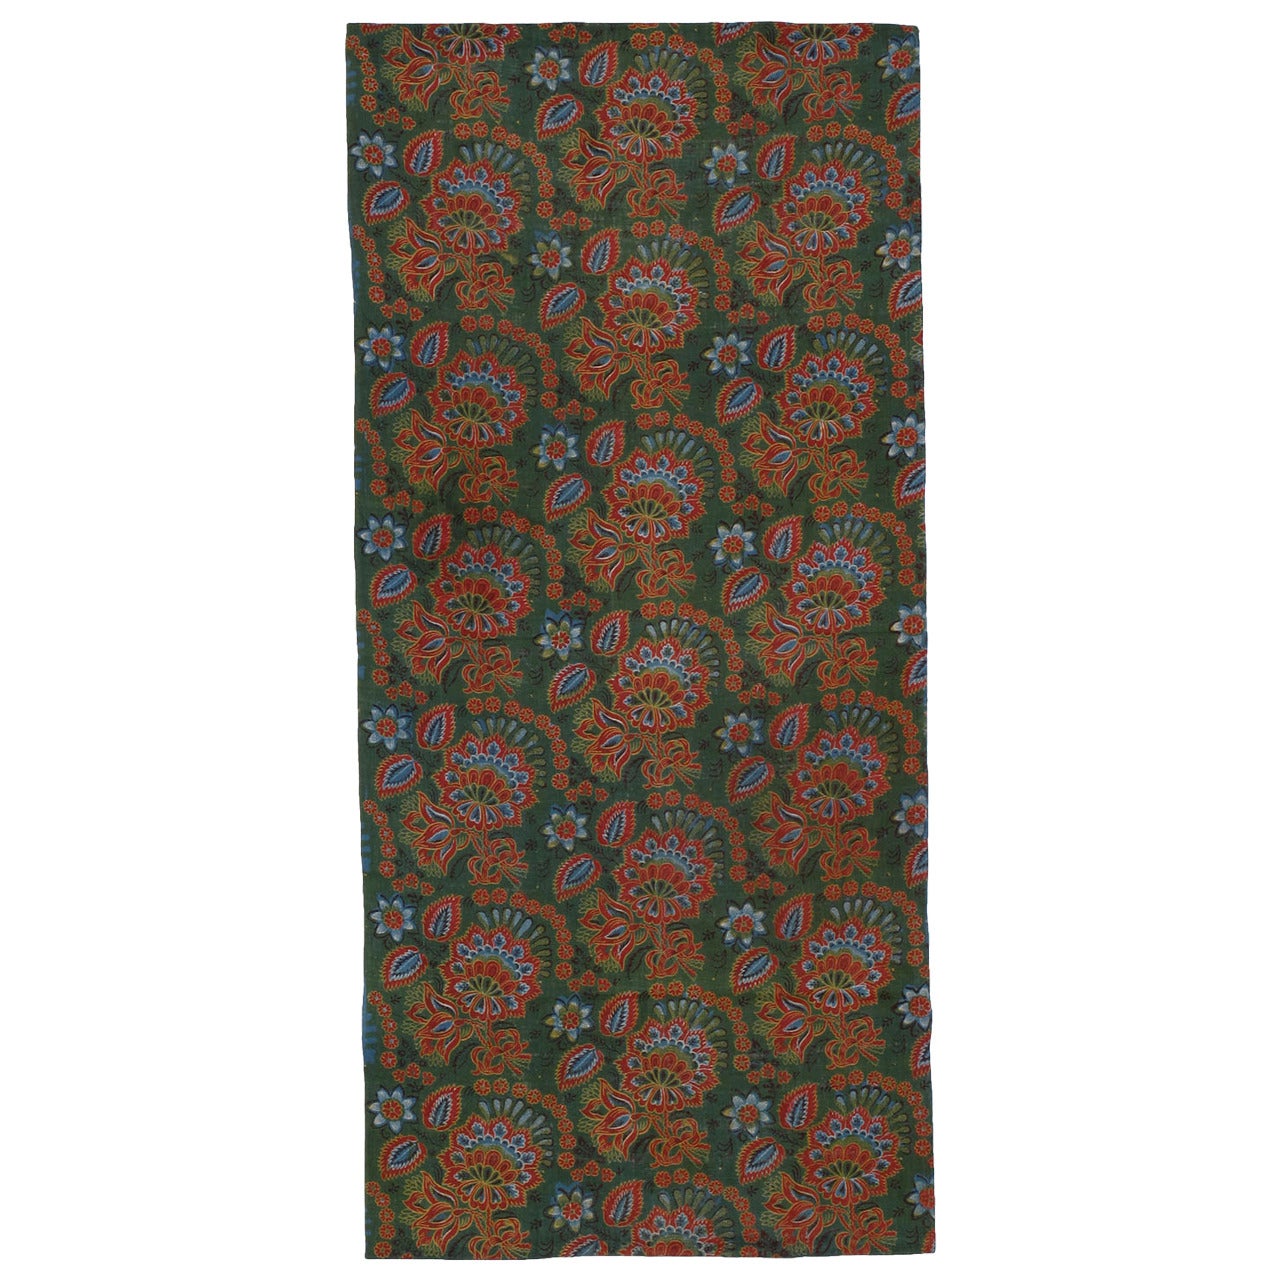 Antique Russian Fabric Panel Rug